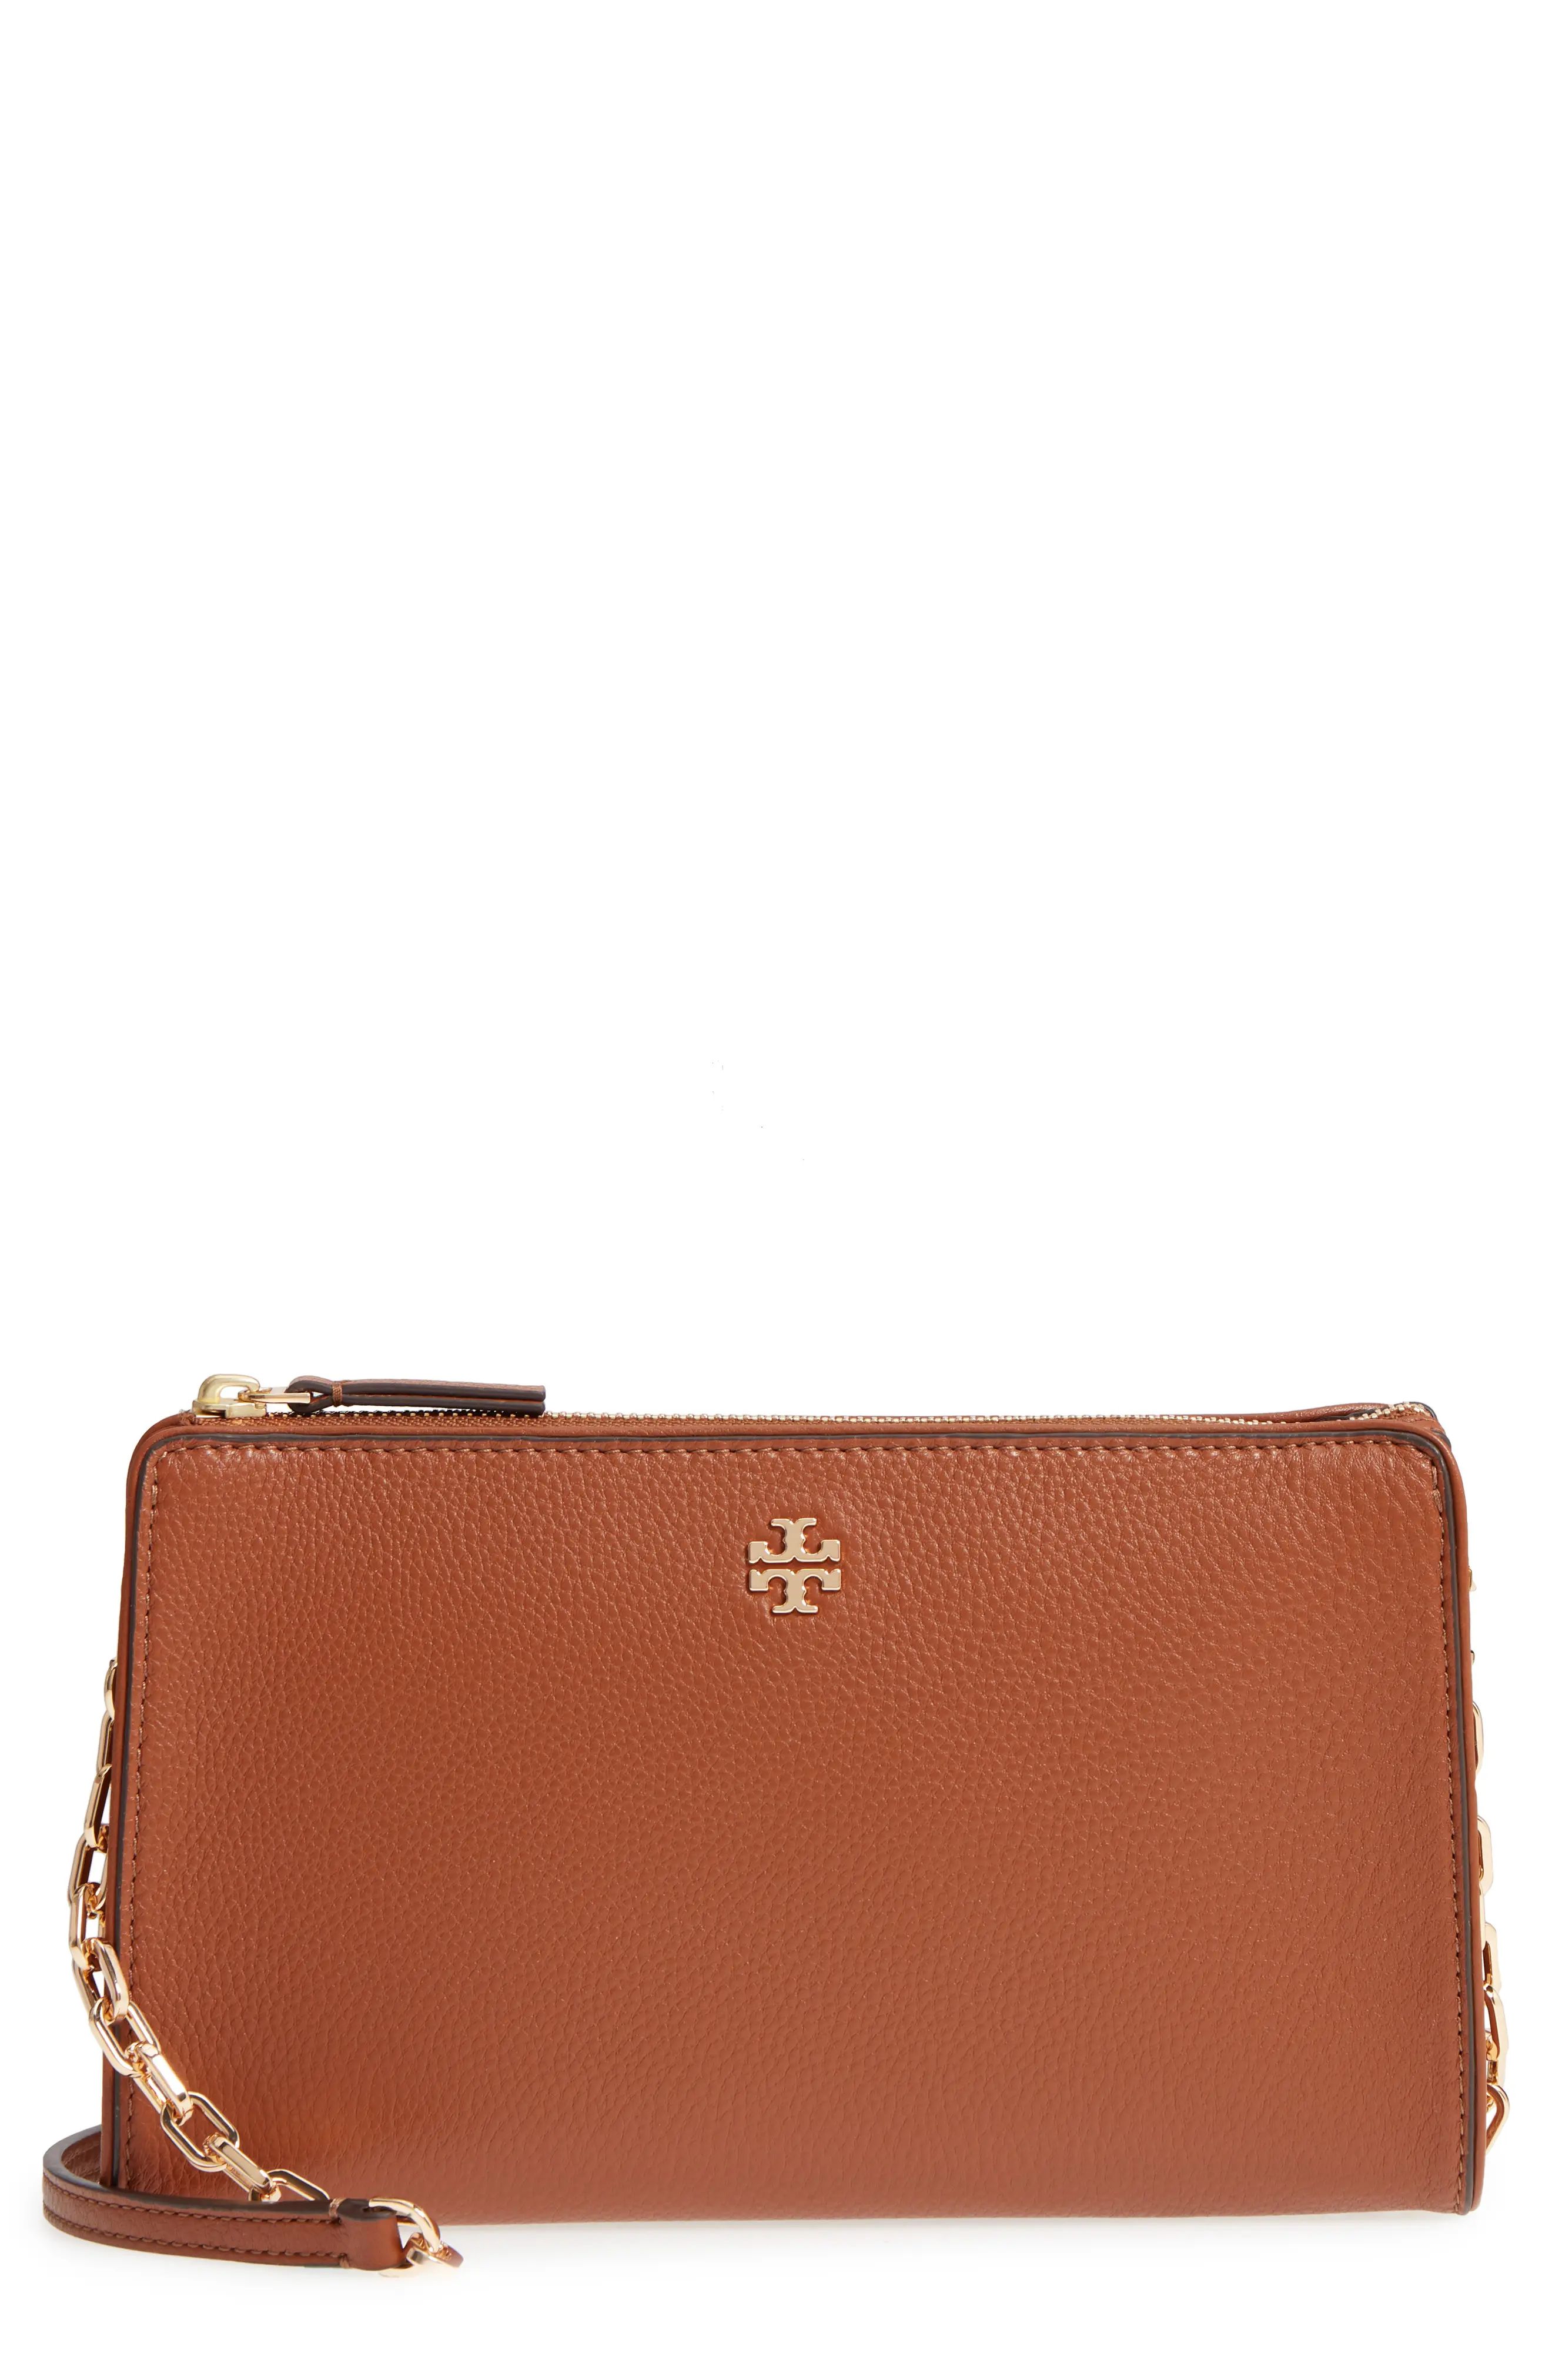 Tory Burch Marsden Leather Wallet Crossbody Bag | Nordstrom